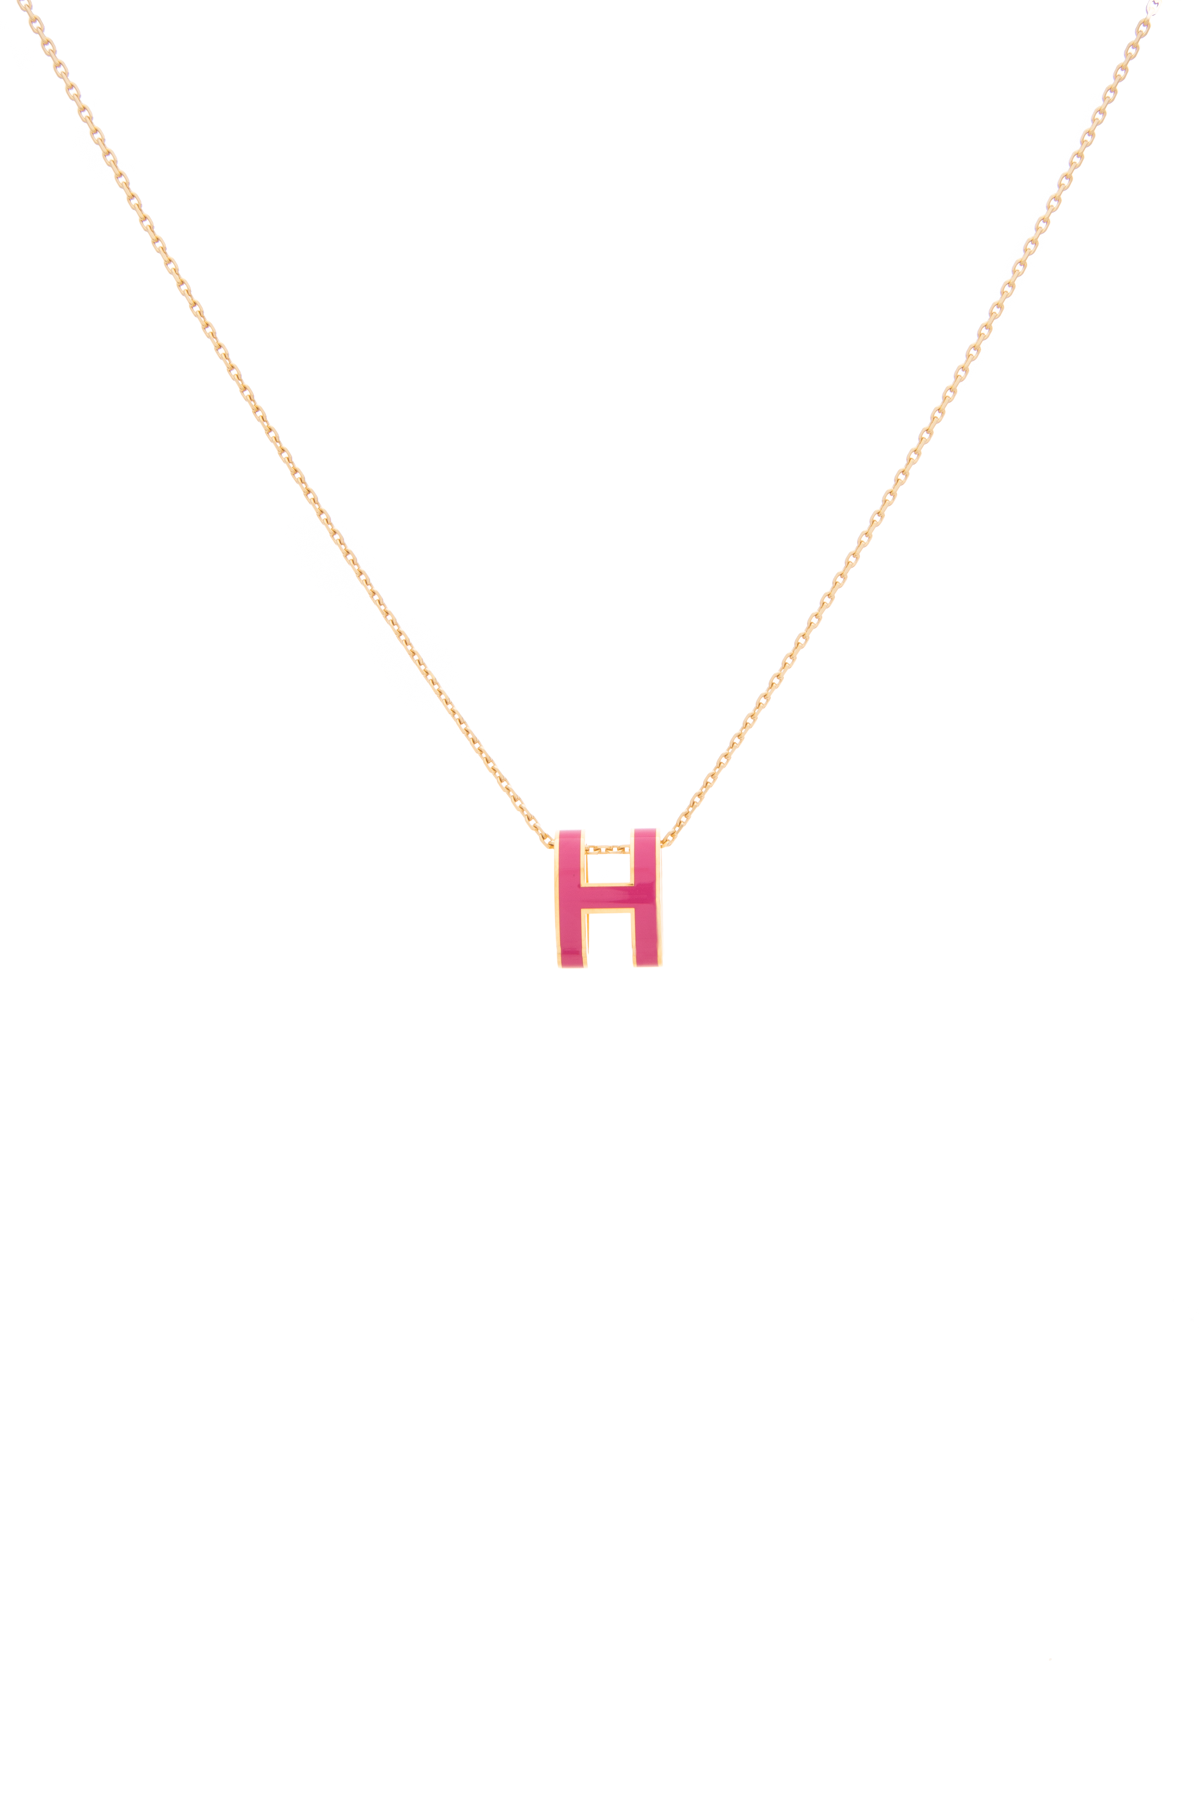 Hermes Pop H Mini Pendant Blue palladium hardware | eBay